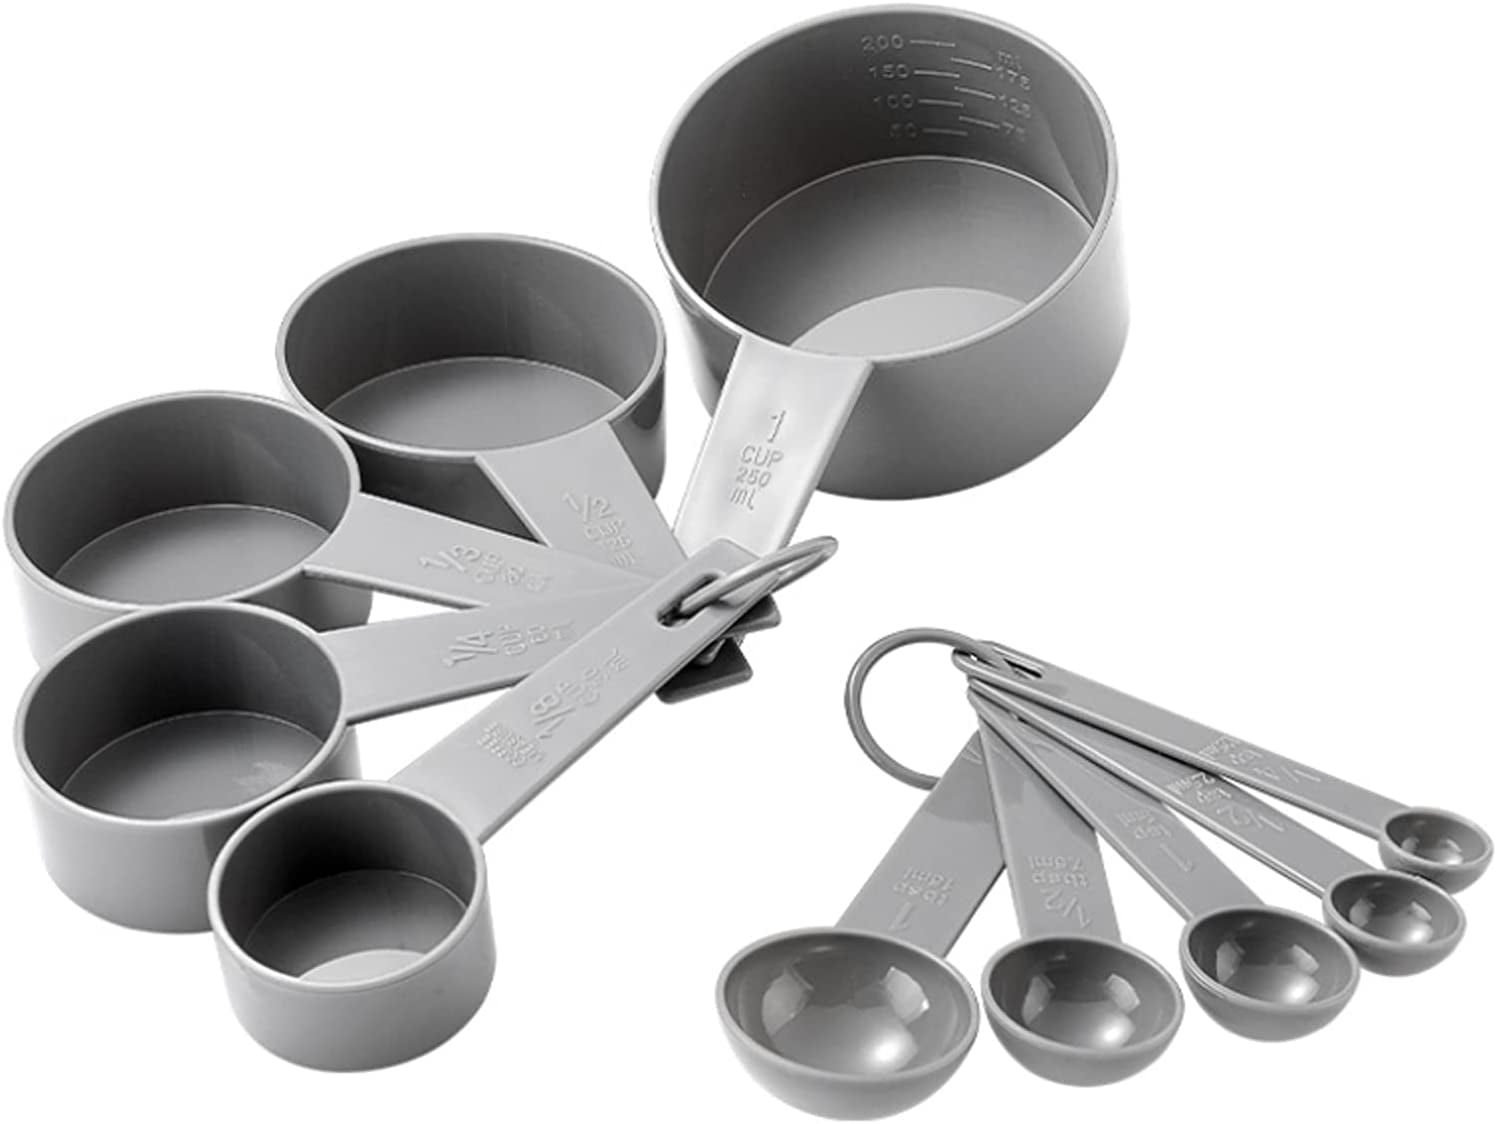 Baker's Secret Stainless Steel Measuring Spoon Set - Grey - 62 requests